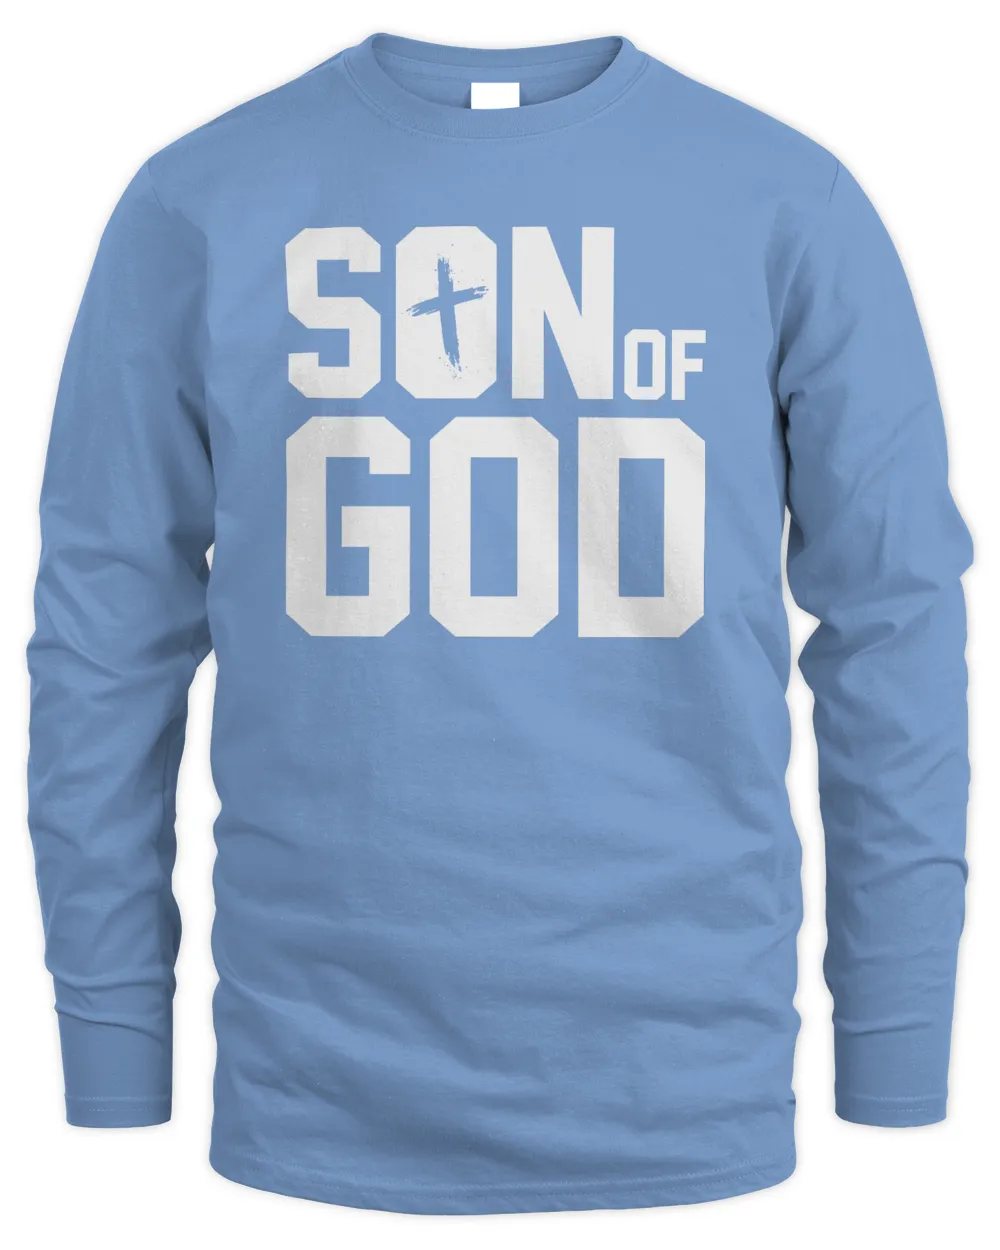 Son Of God Shirt